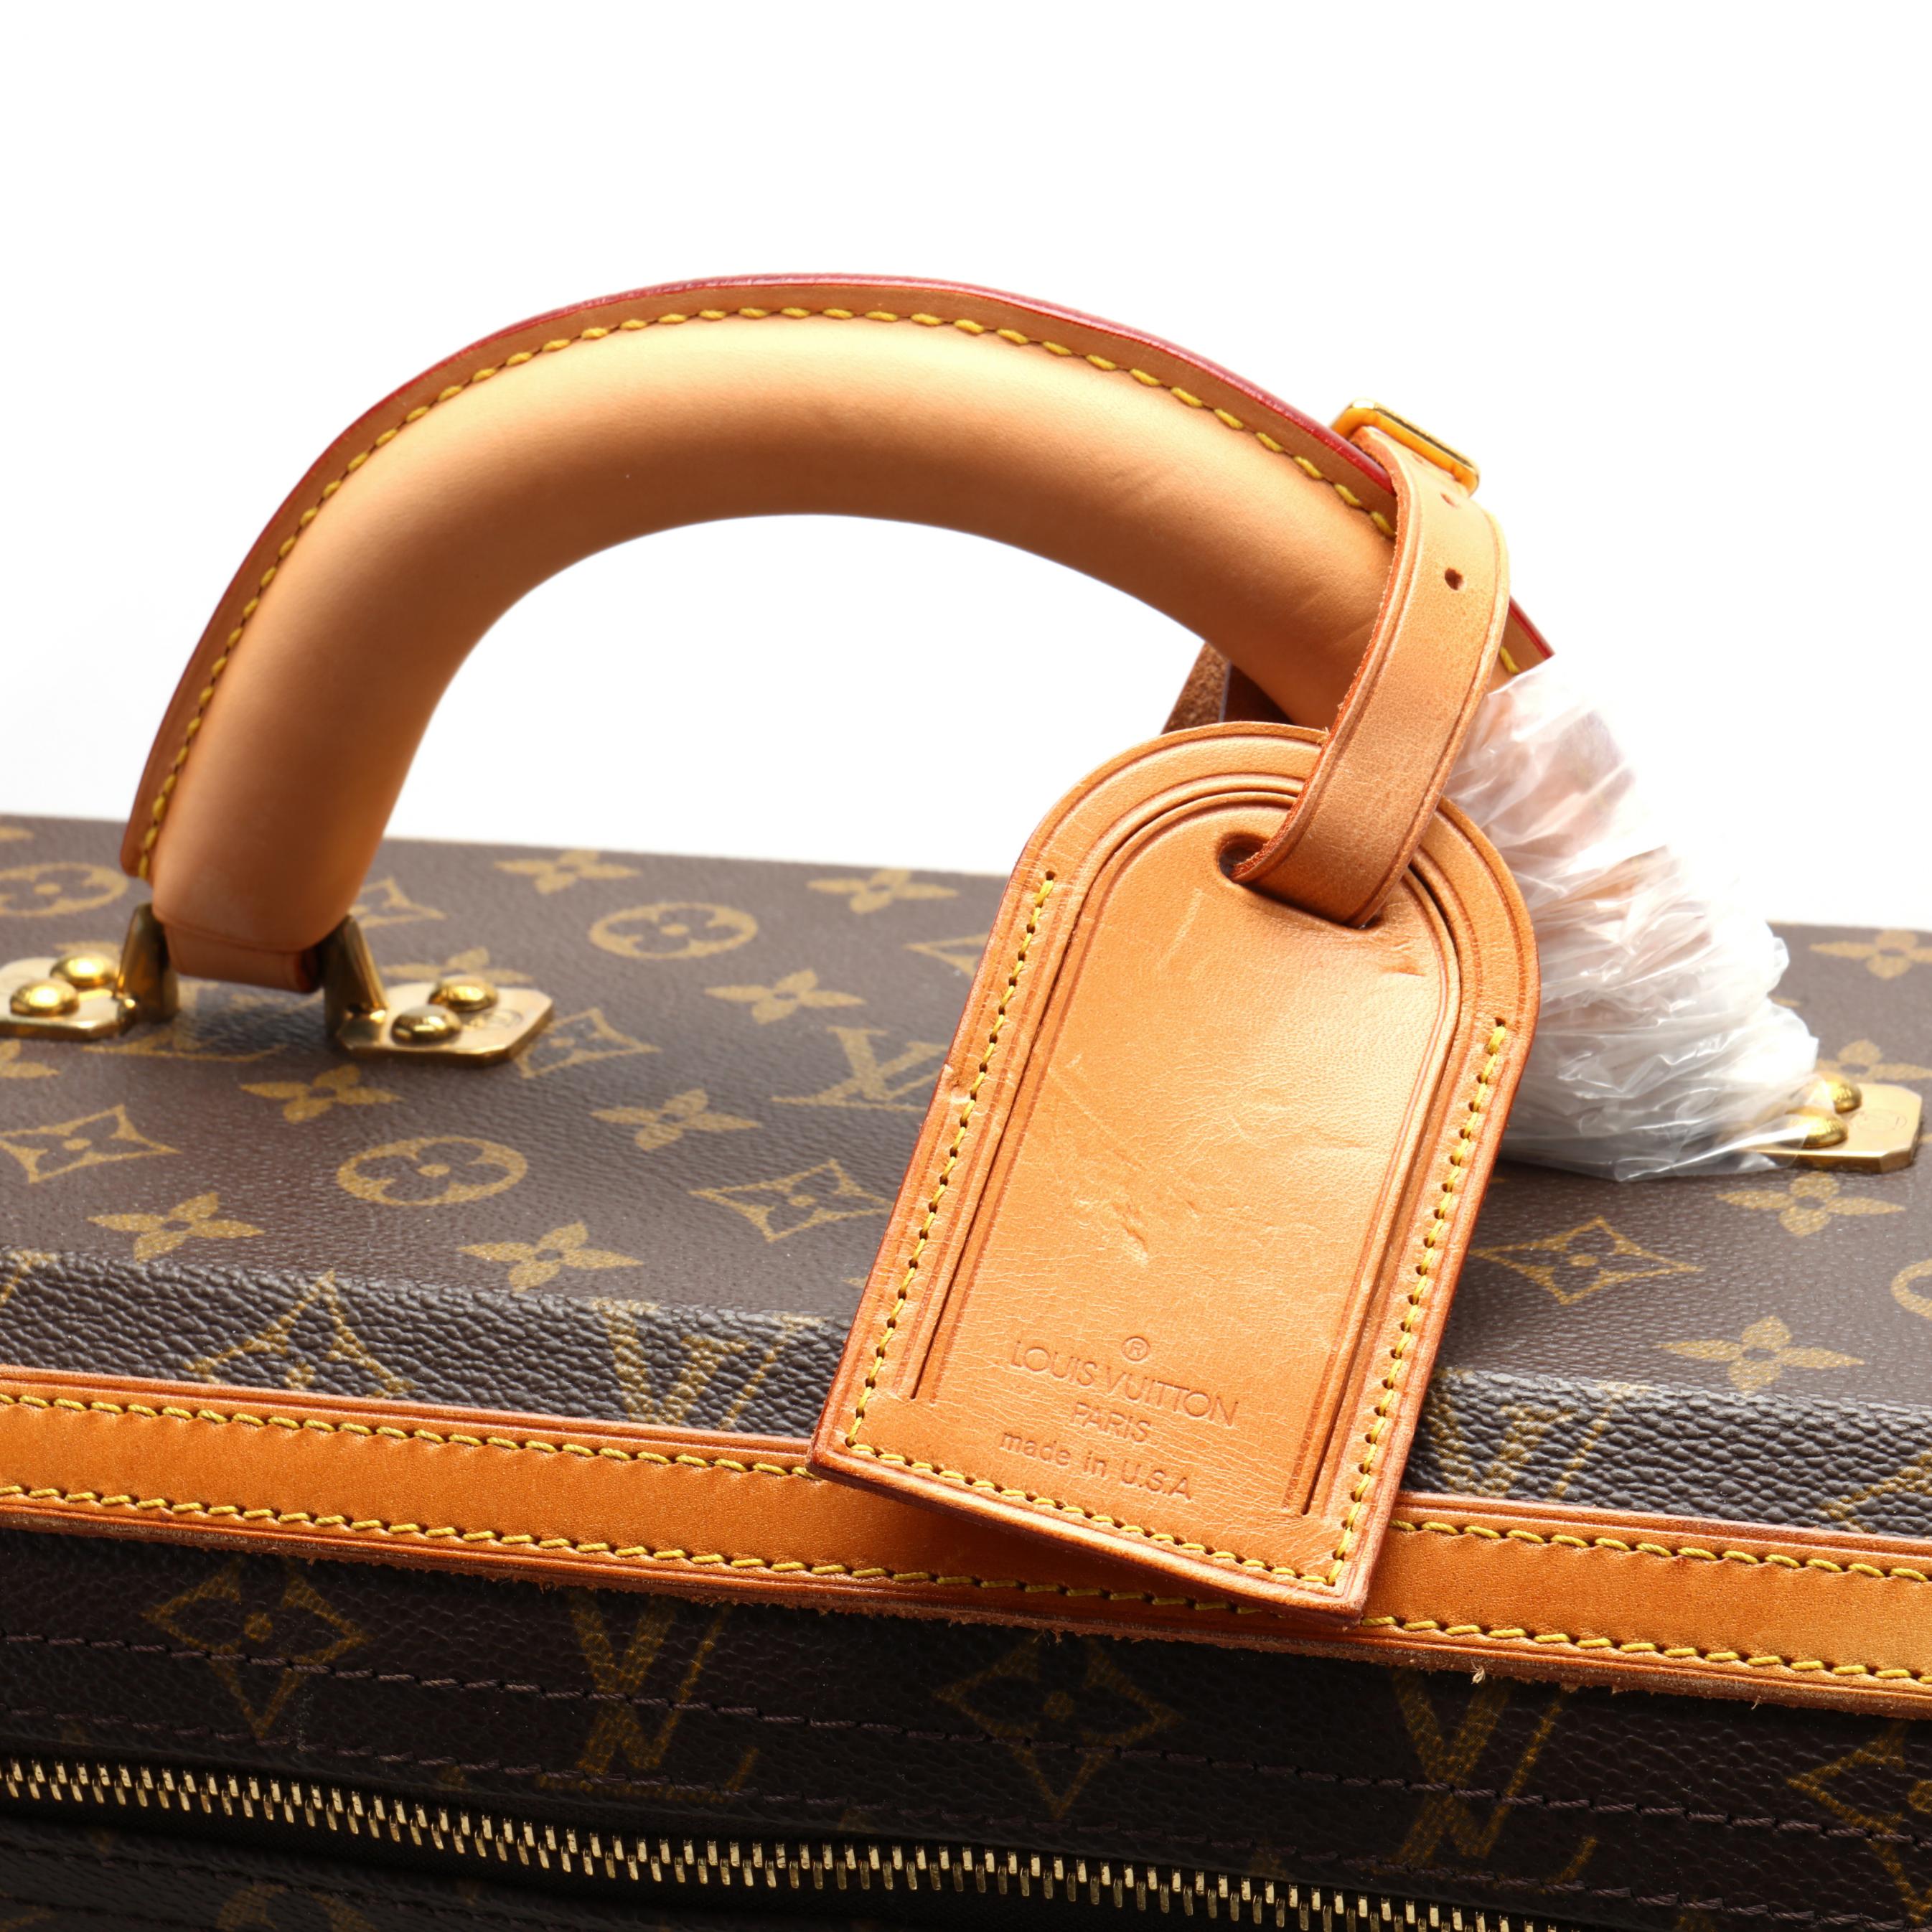 Rare Louis Vuitton 'Cruiser Travel bag in brown canvas and gold